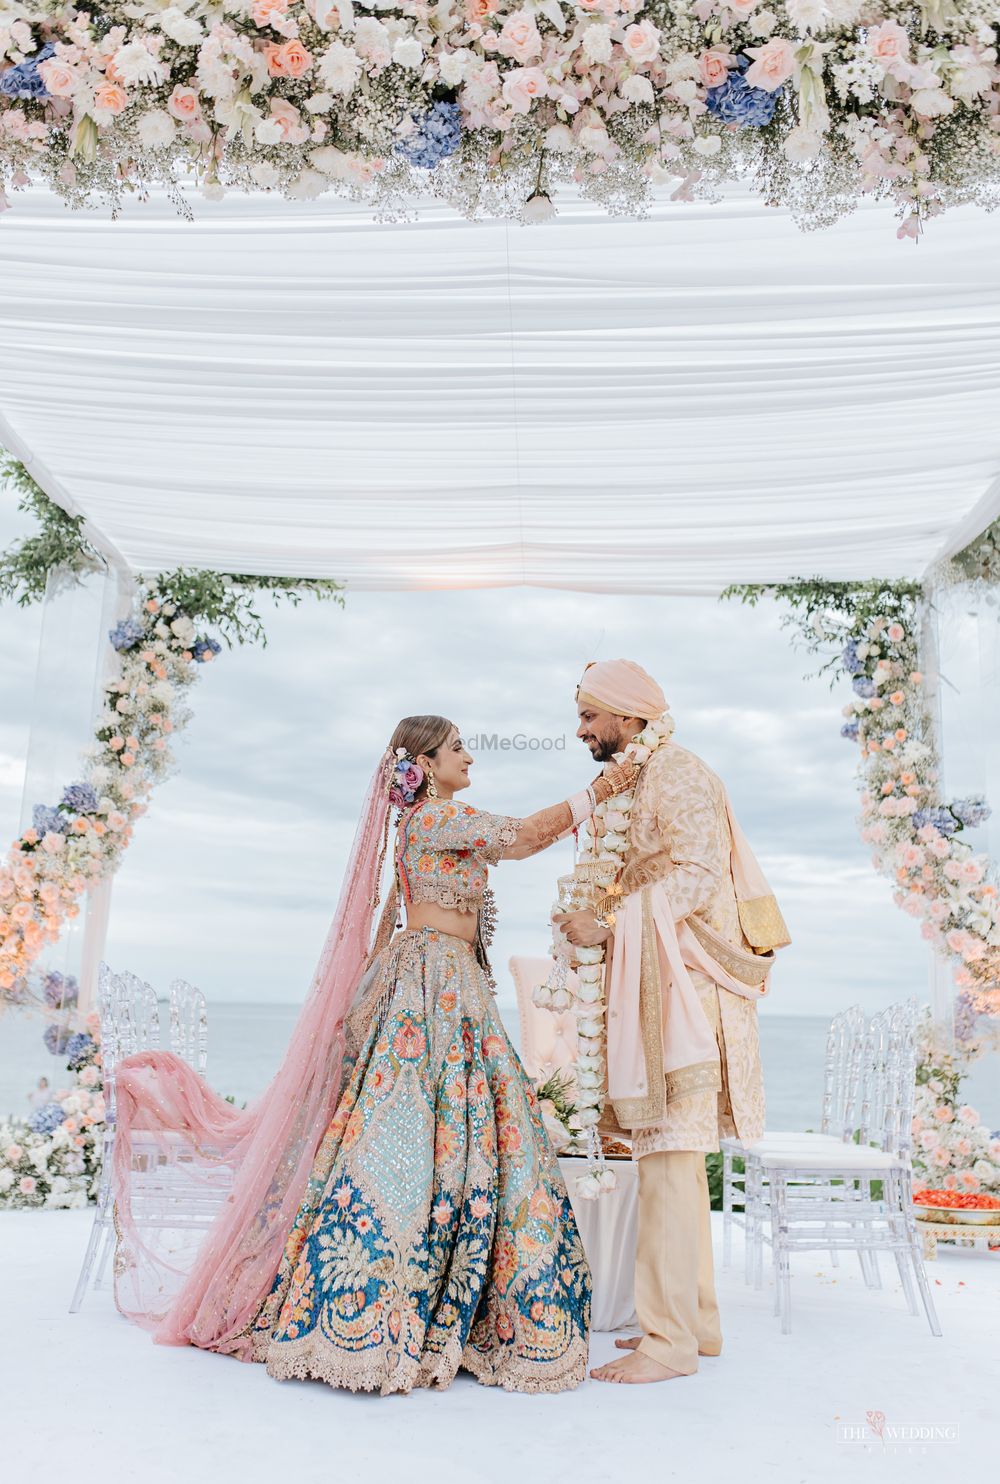 Photo of couple during varmala on wedding day